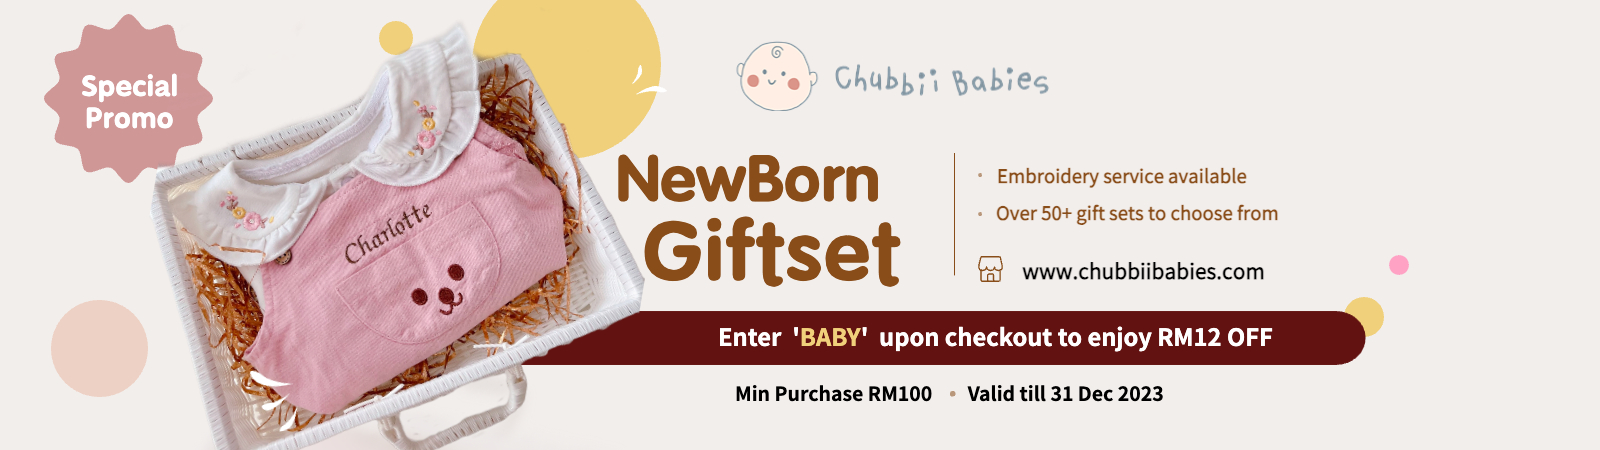 Chubbii Babies: Elevating the Art of Newborn Gifting